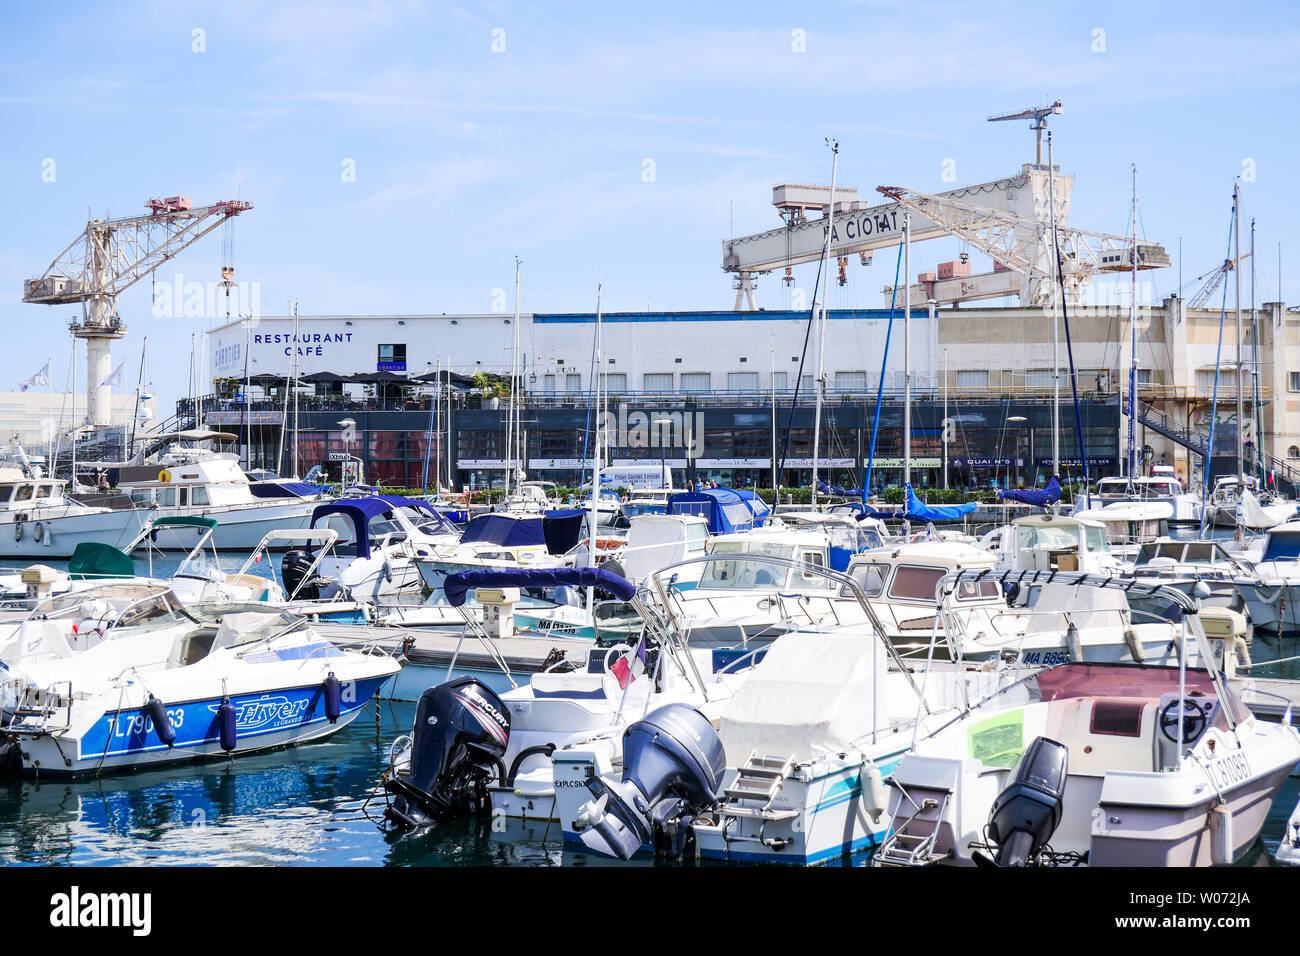 Mototboats im Quay in der Hafen, La Ciotat, Bouches-du-Rhône, Frankreich Stockfoto